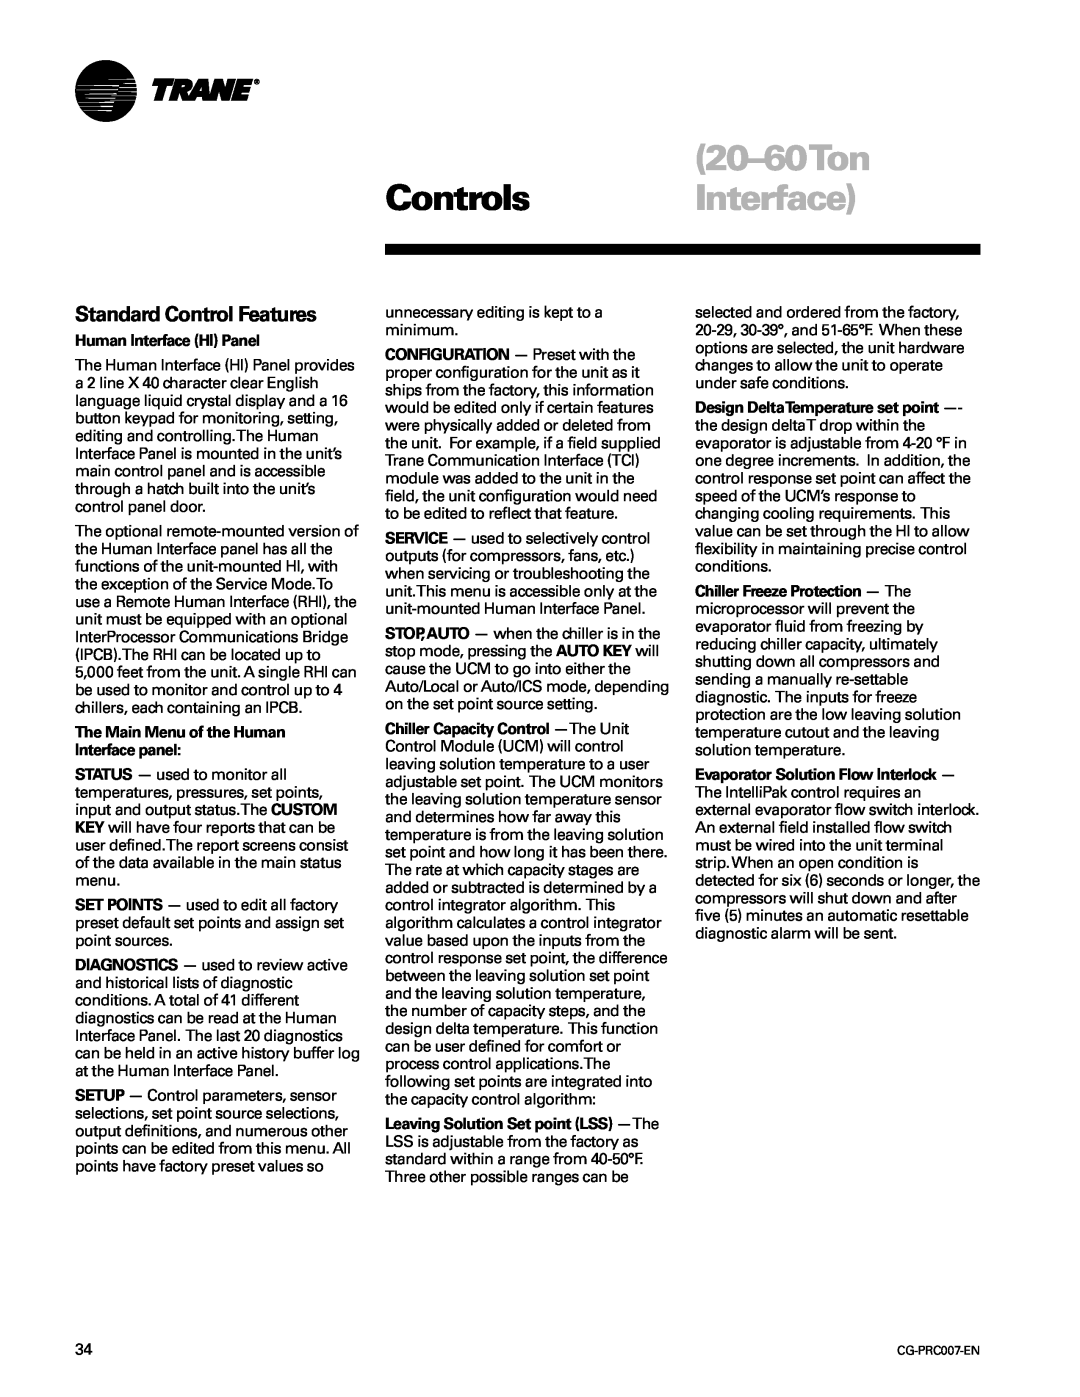 Trane CG-PRC007-EN manual 20-60Ton Controls Interface, Standard Control Features, Human Interface HI Panel 